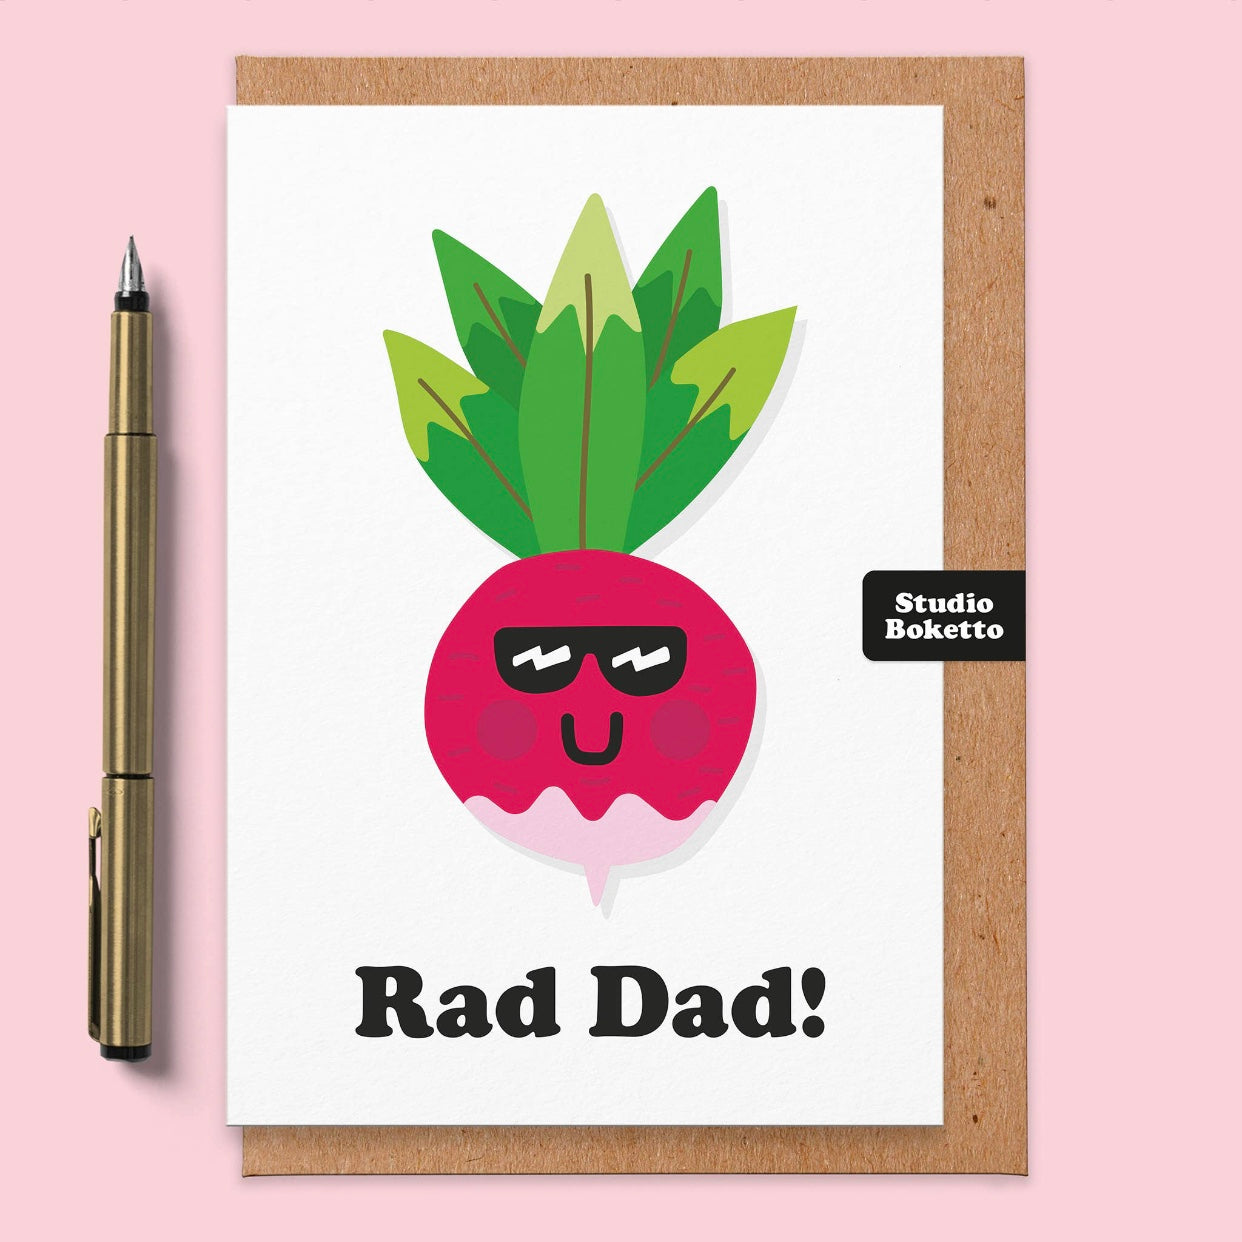 Rad dad greeting card